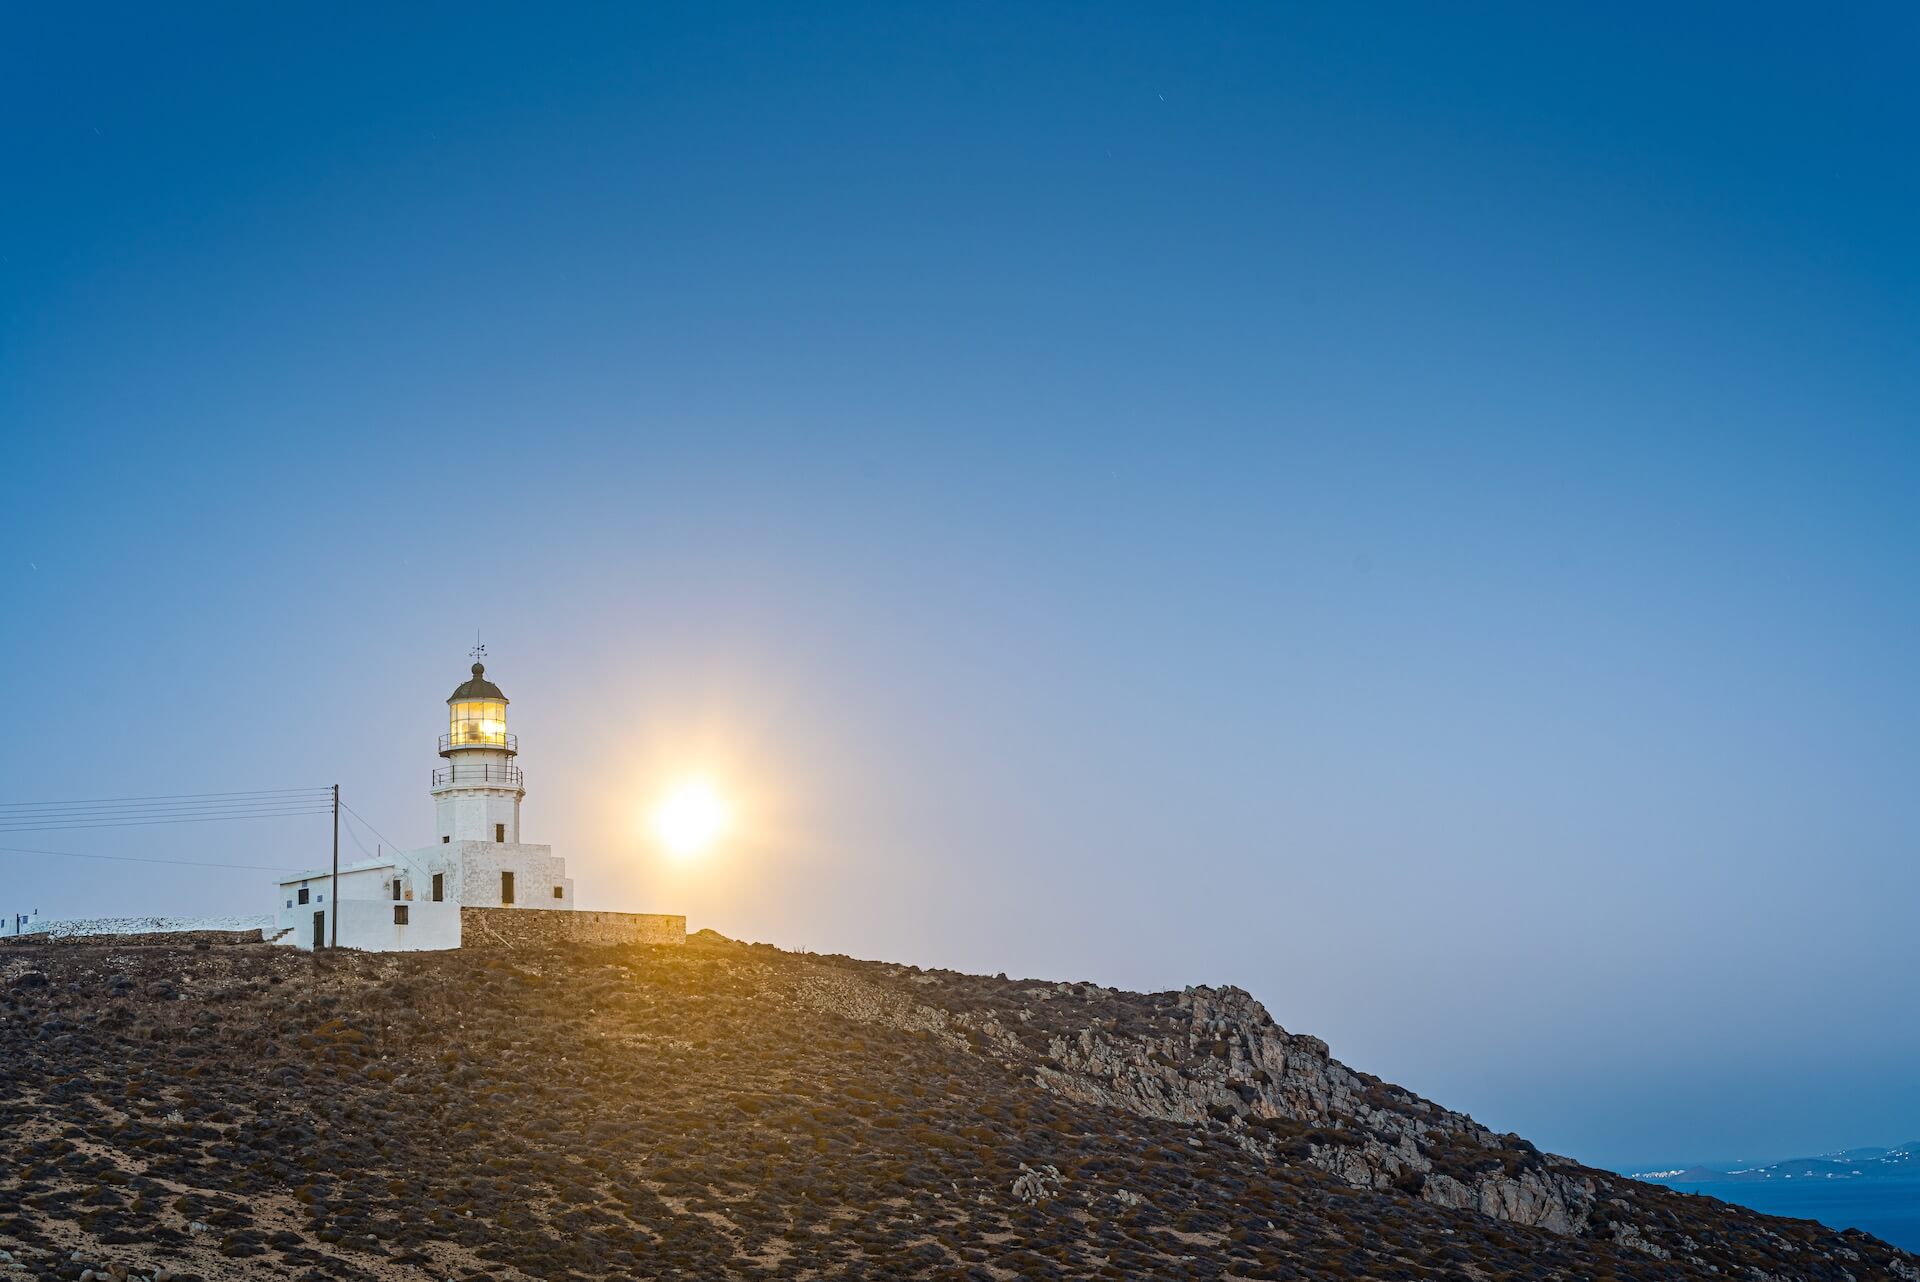 Armenistis Lighthouse on the coast of Mykonos 